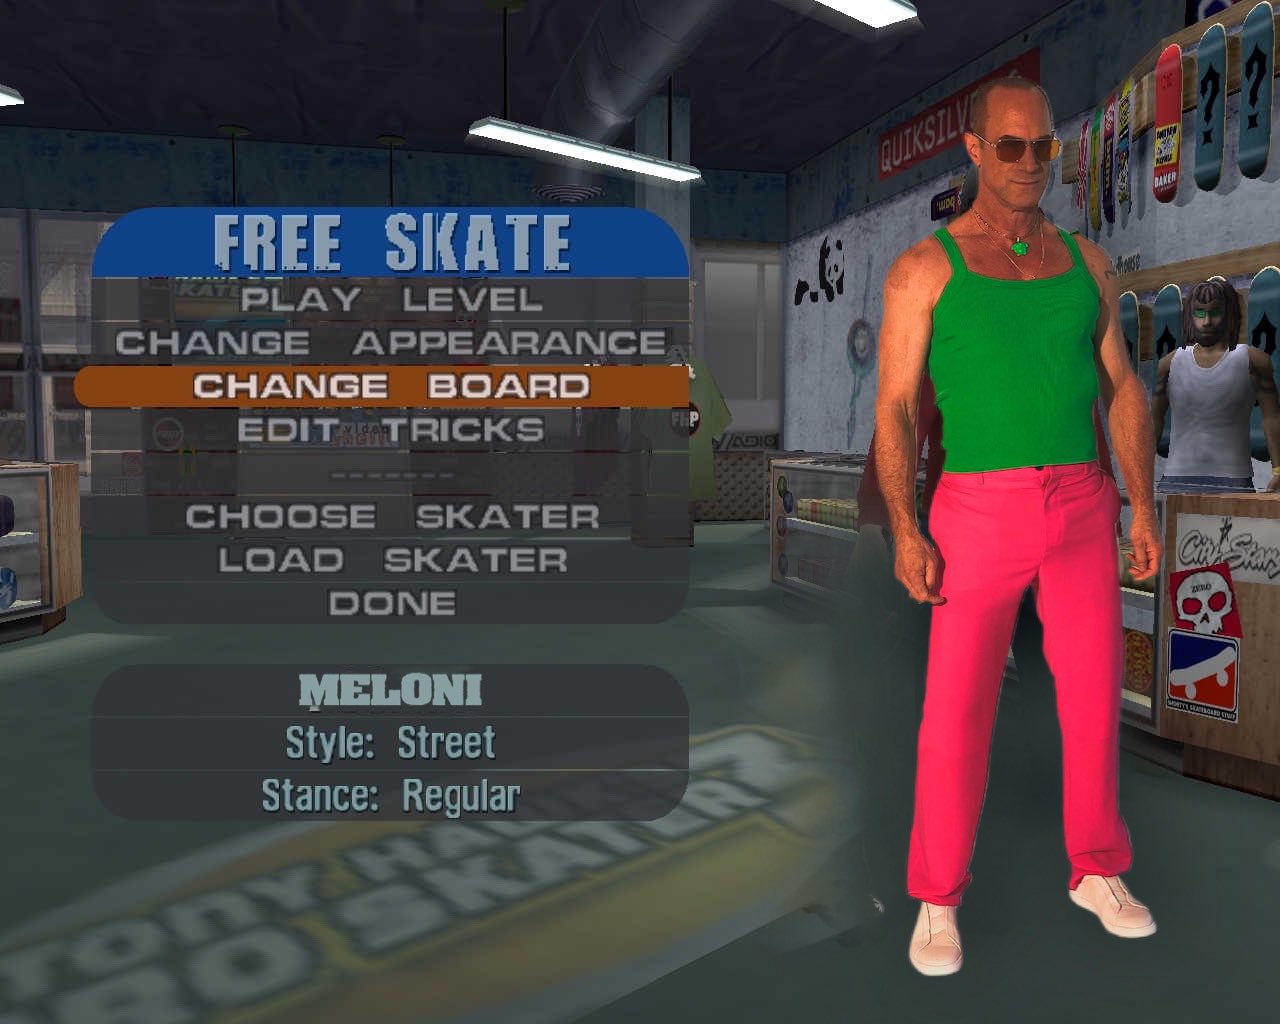 funny gaming memes - Www Quiksilva Maken Free Skate Nase Kaplay Level Change Appearance Change Board Edit Tricks Adid Choose Skater Load Skater Done Meloni Style Street Stance Regular